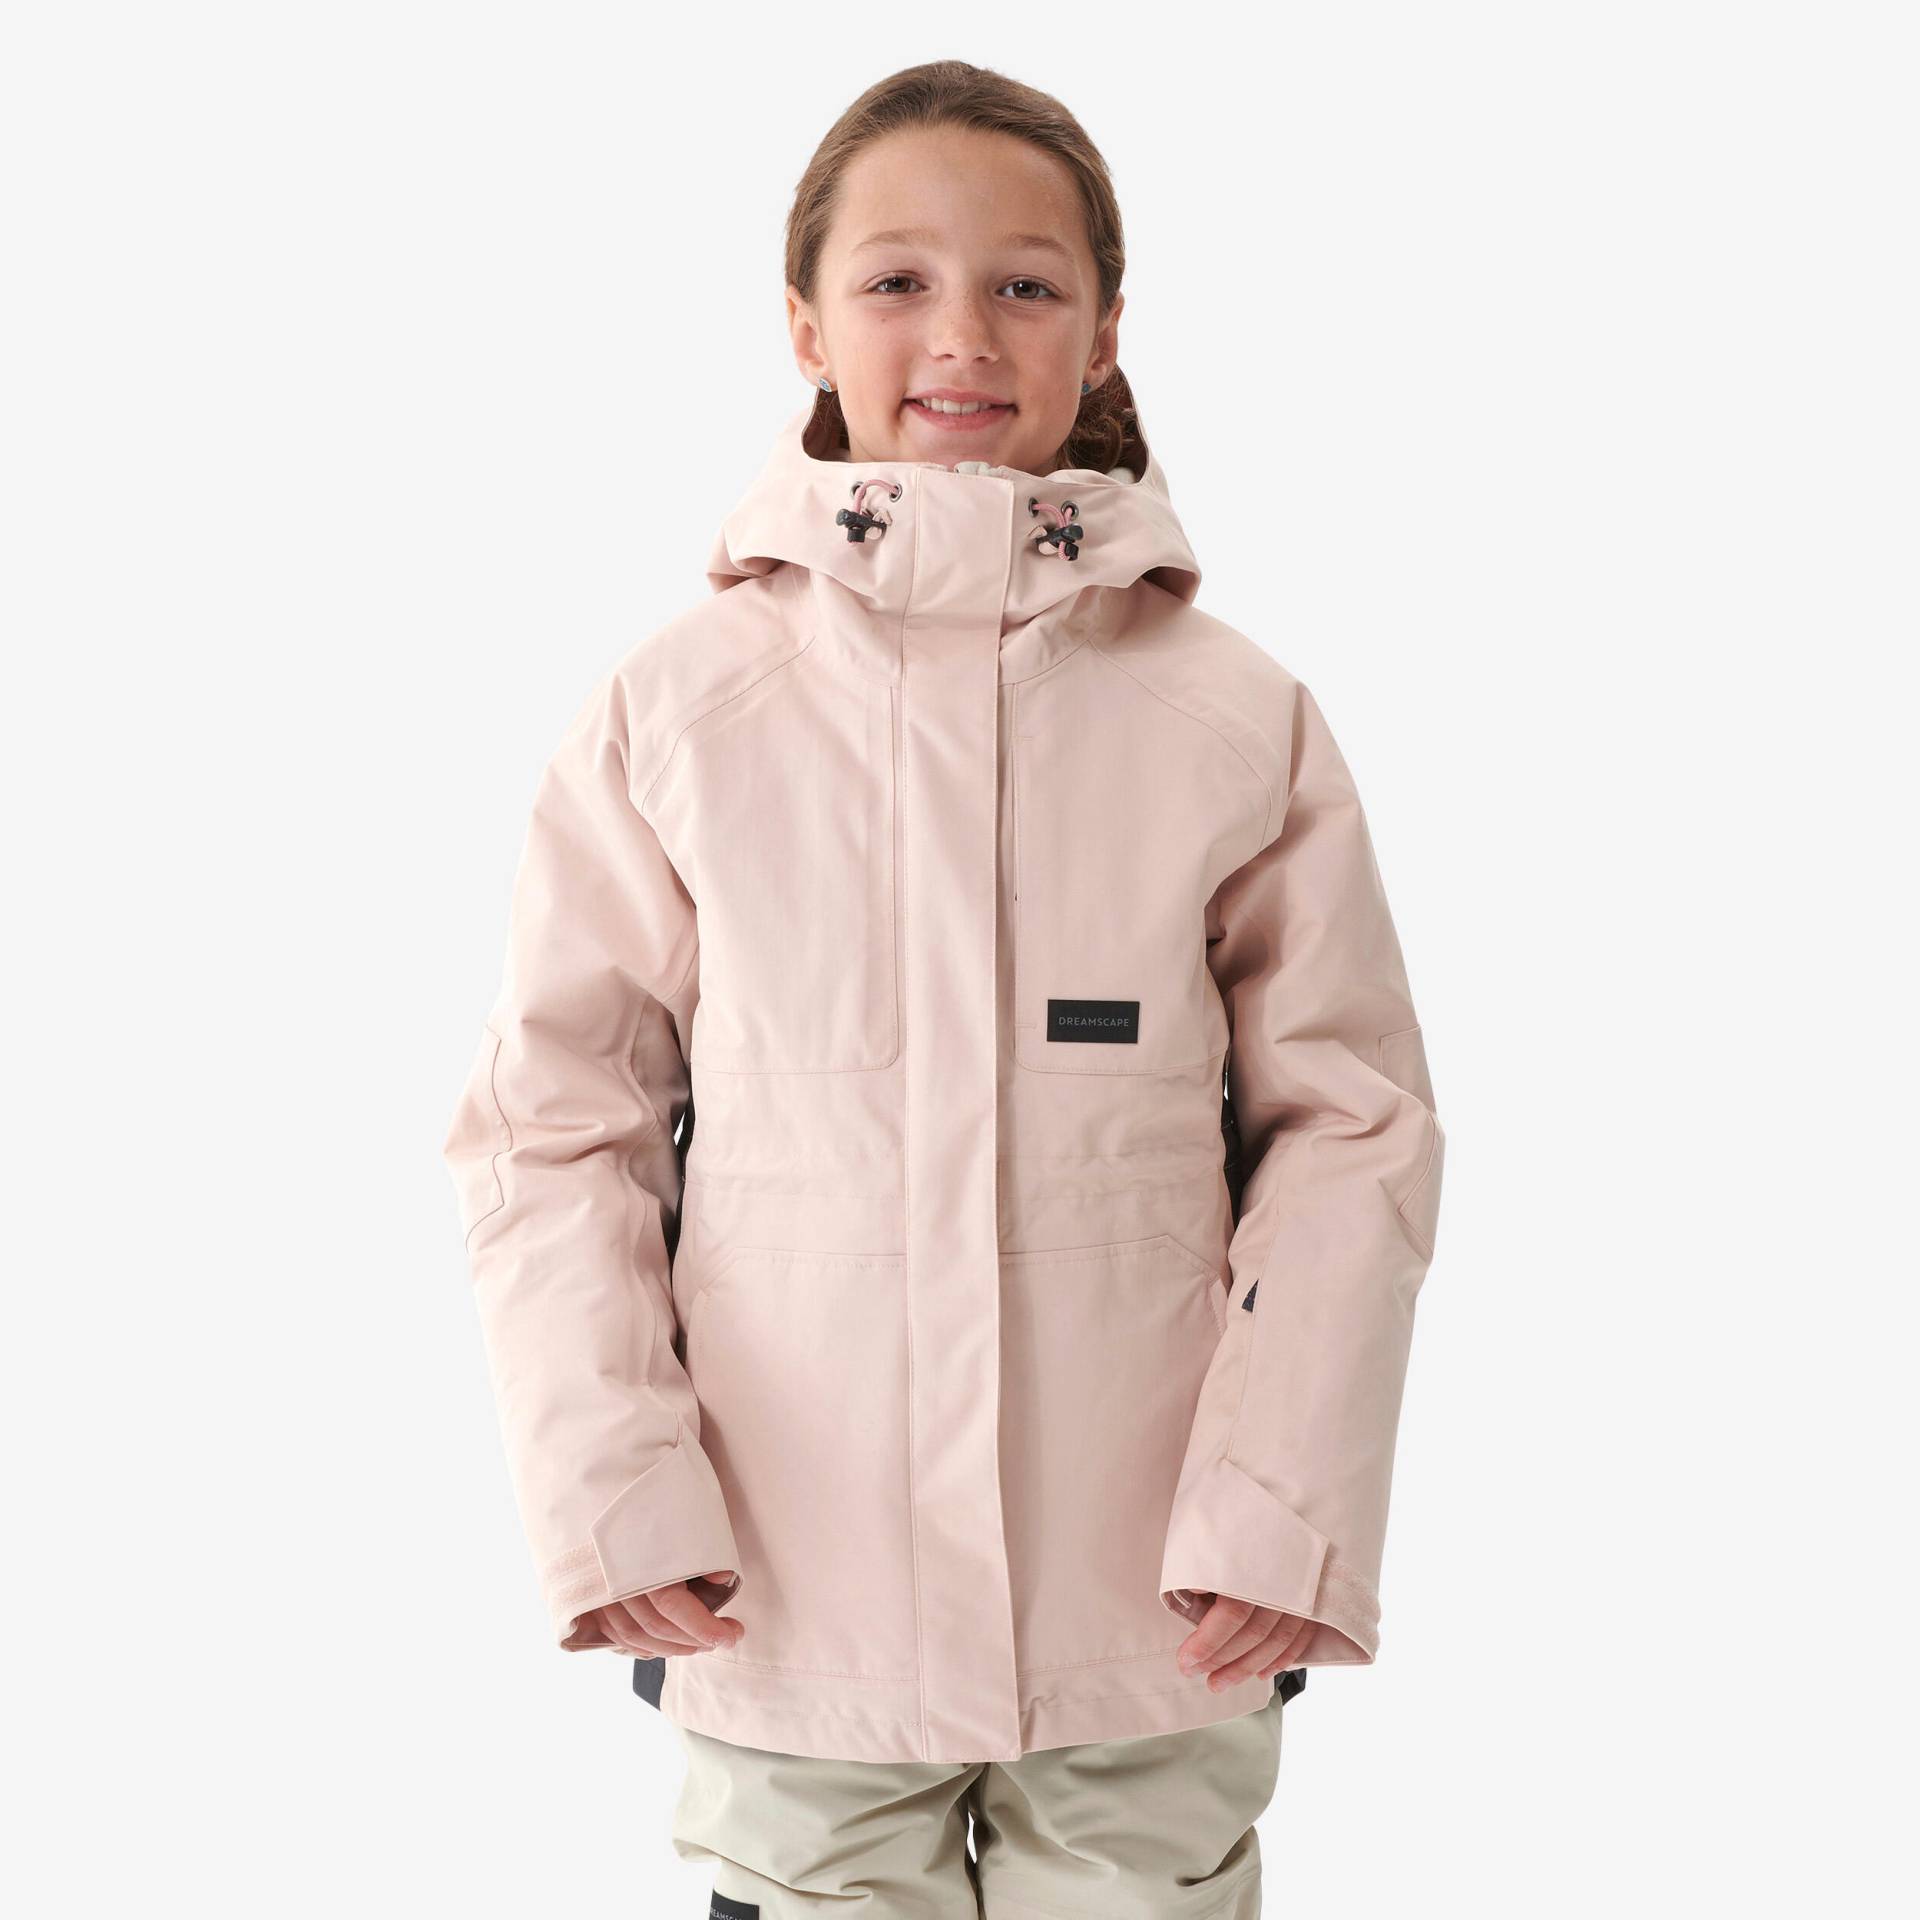 Snowboardjacke Kinder - SNB 500 Teen Girl rosa von DREAMSCAPE